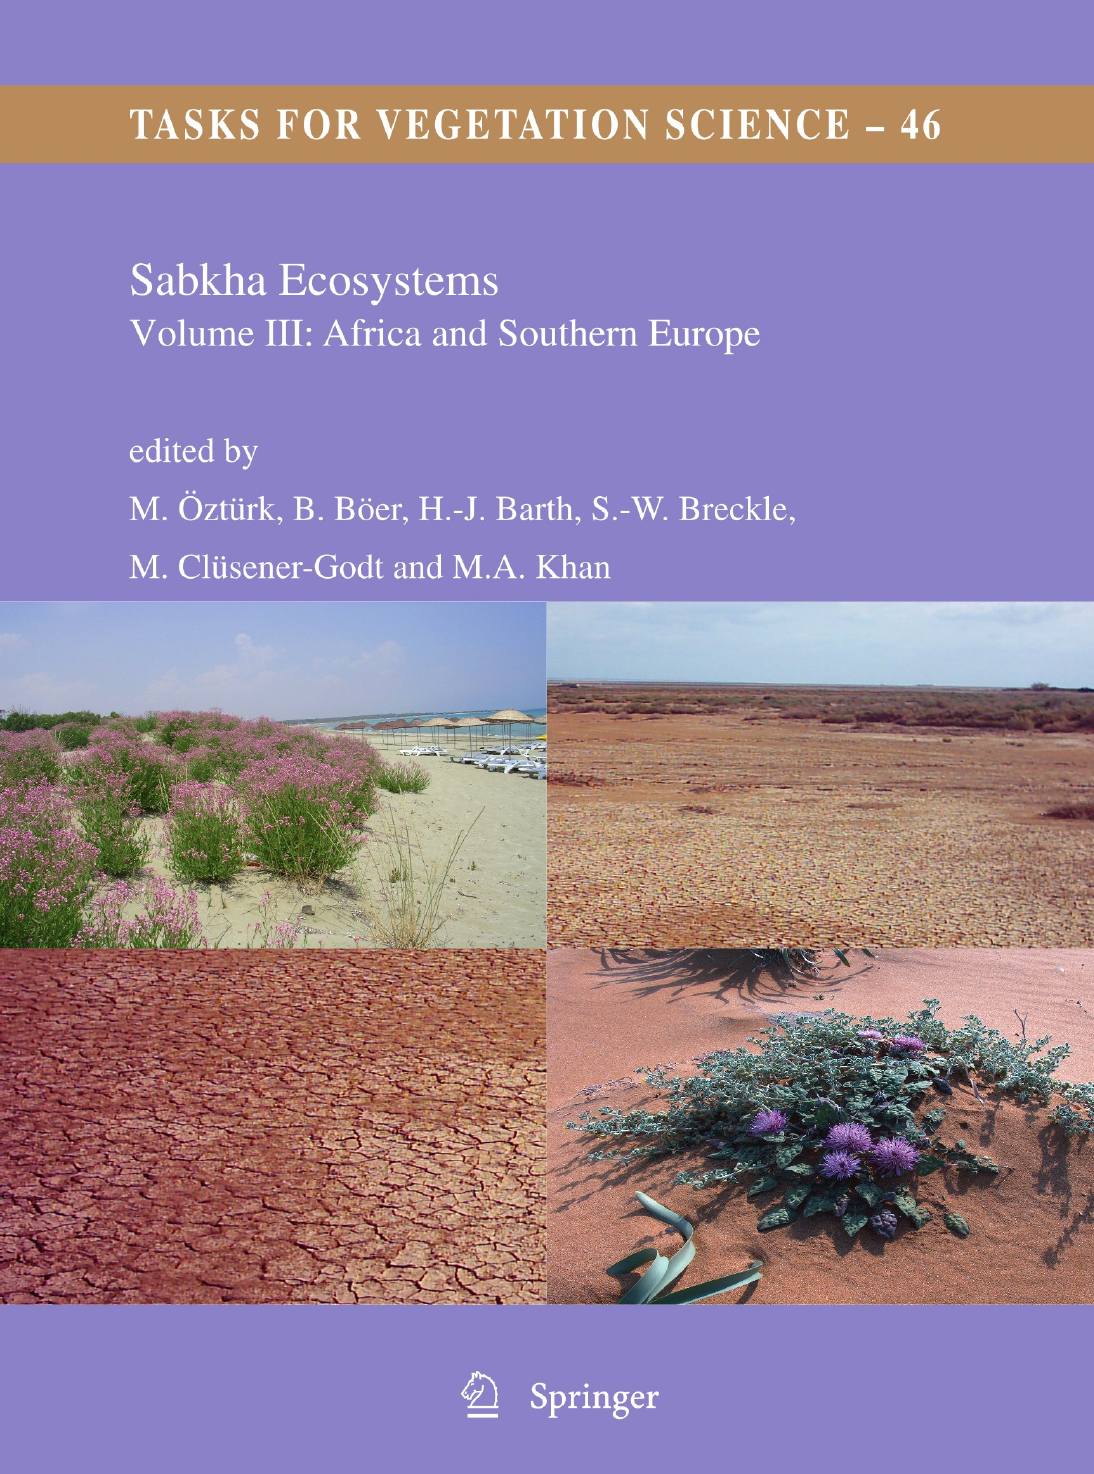 Jardin Des Plantes De Montpellier Charmant Tasks for Ve ation Science] Sabkha Ecosystems Volume 46